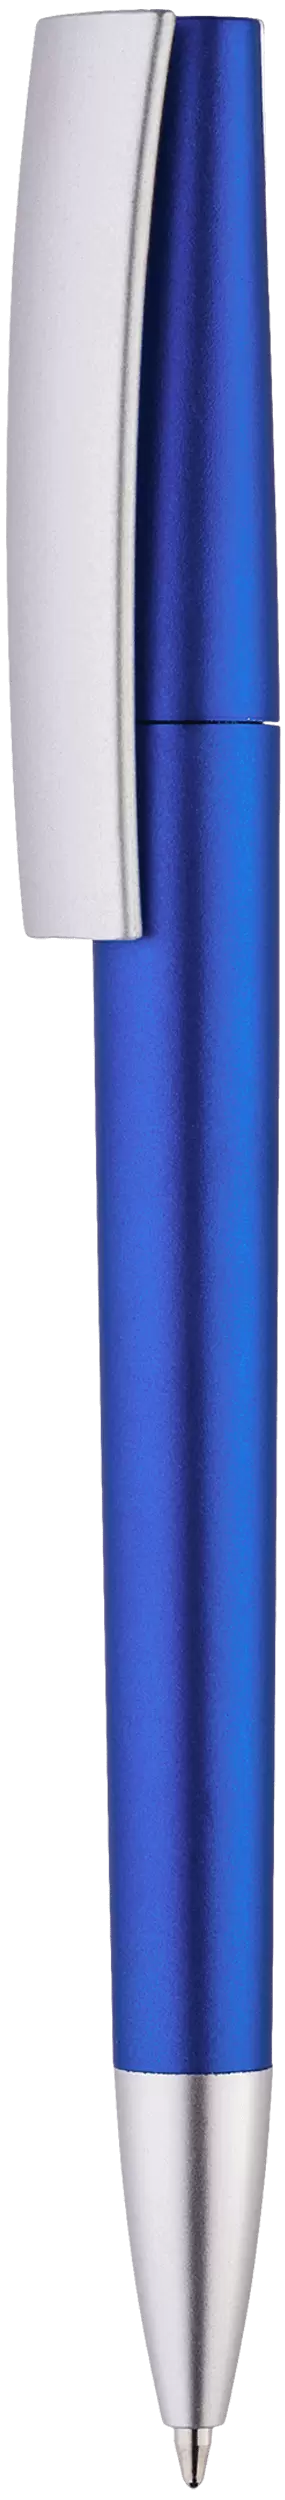 Ручка ZETA METALLIC Синяя 1014-01